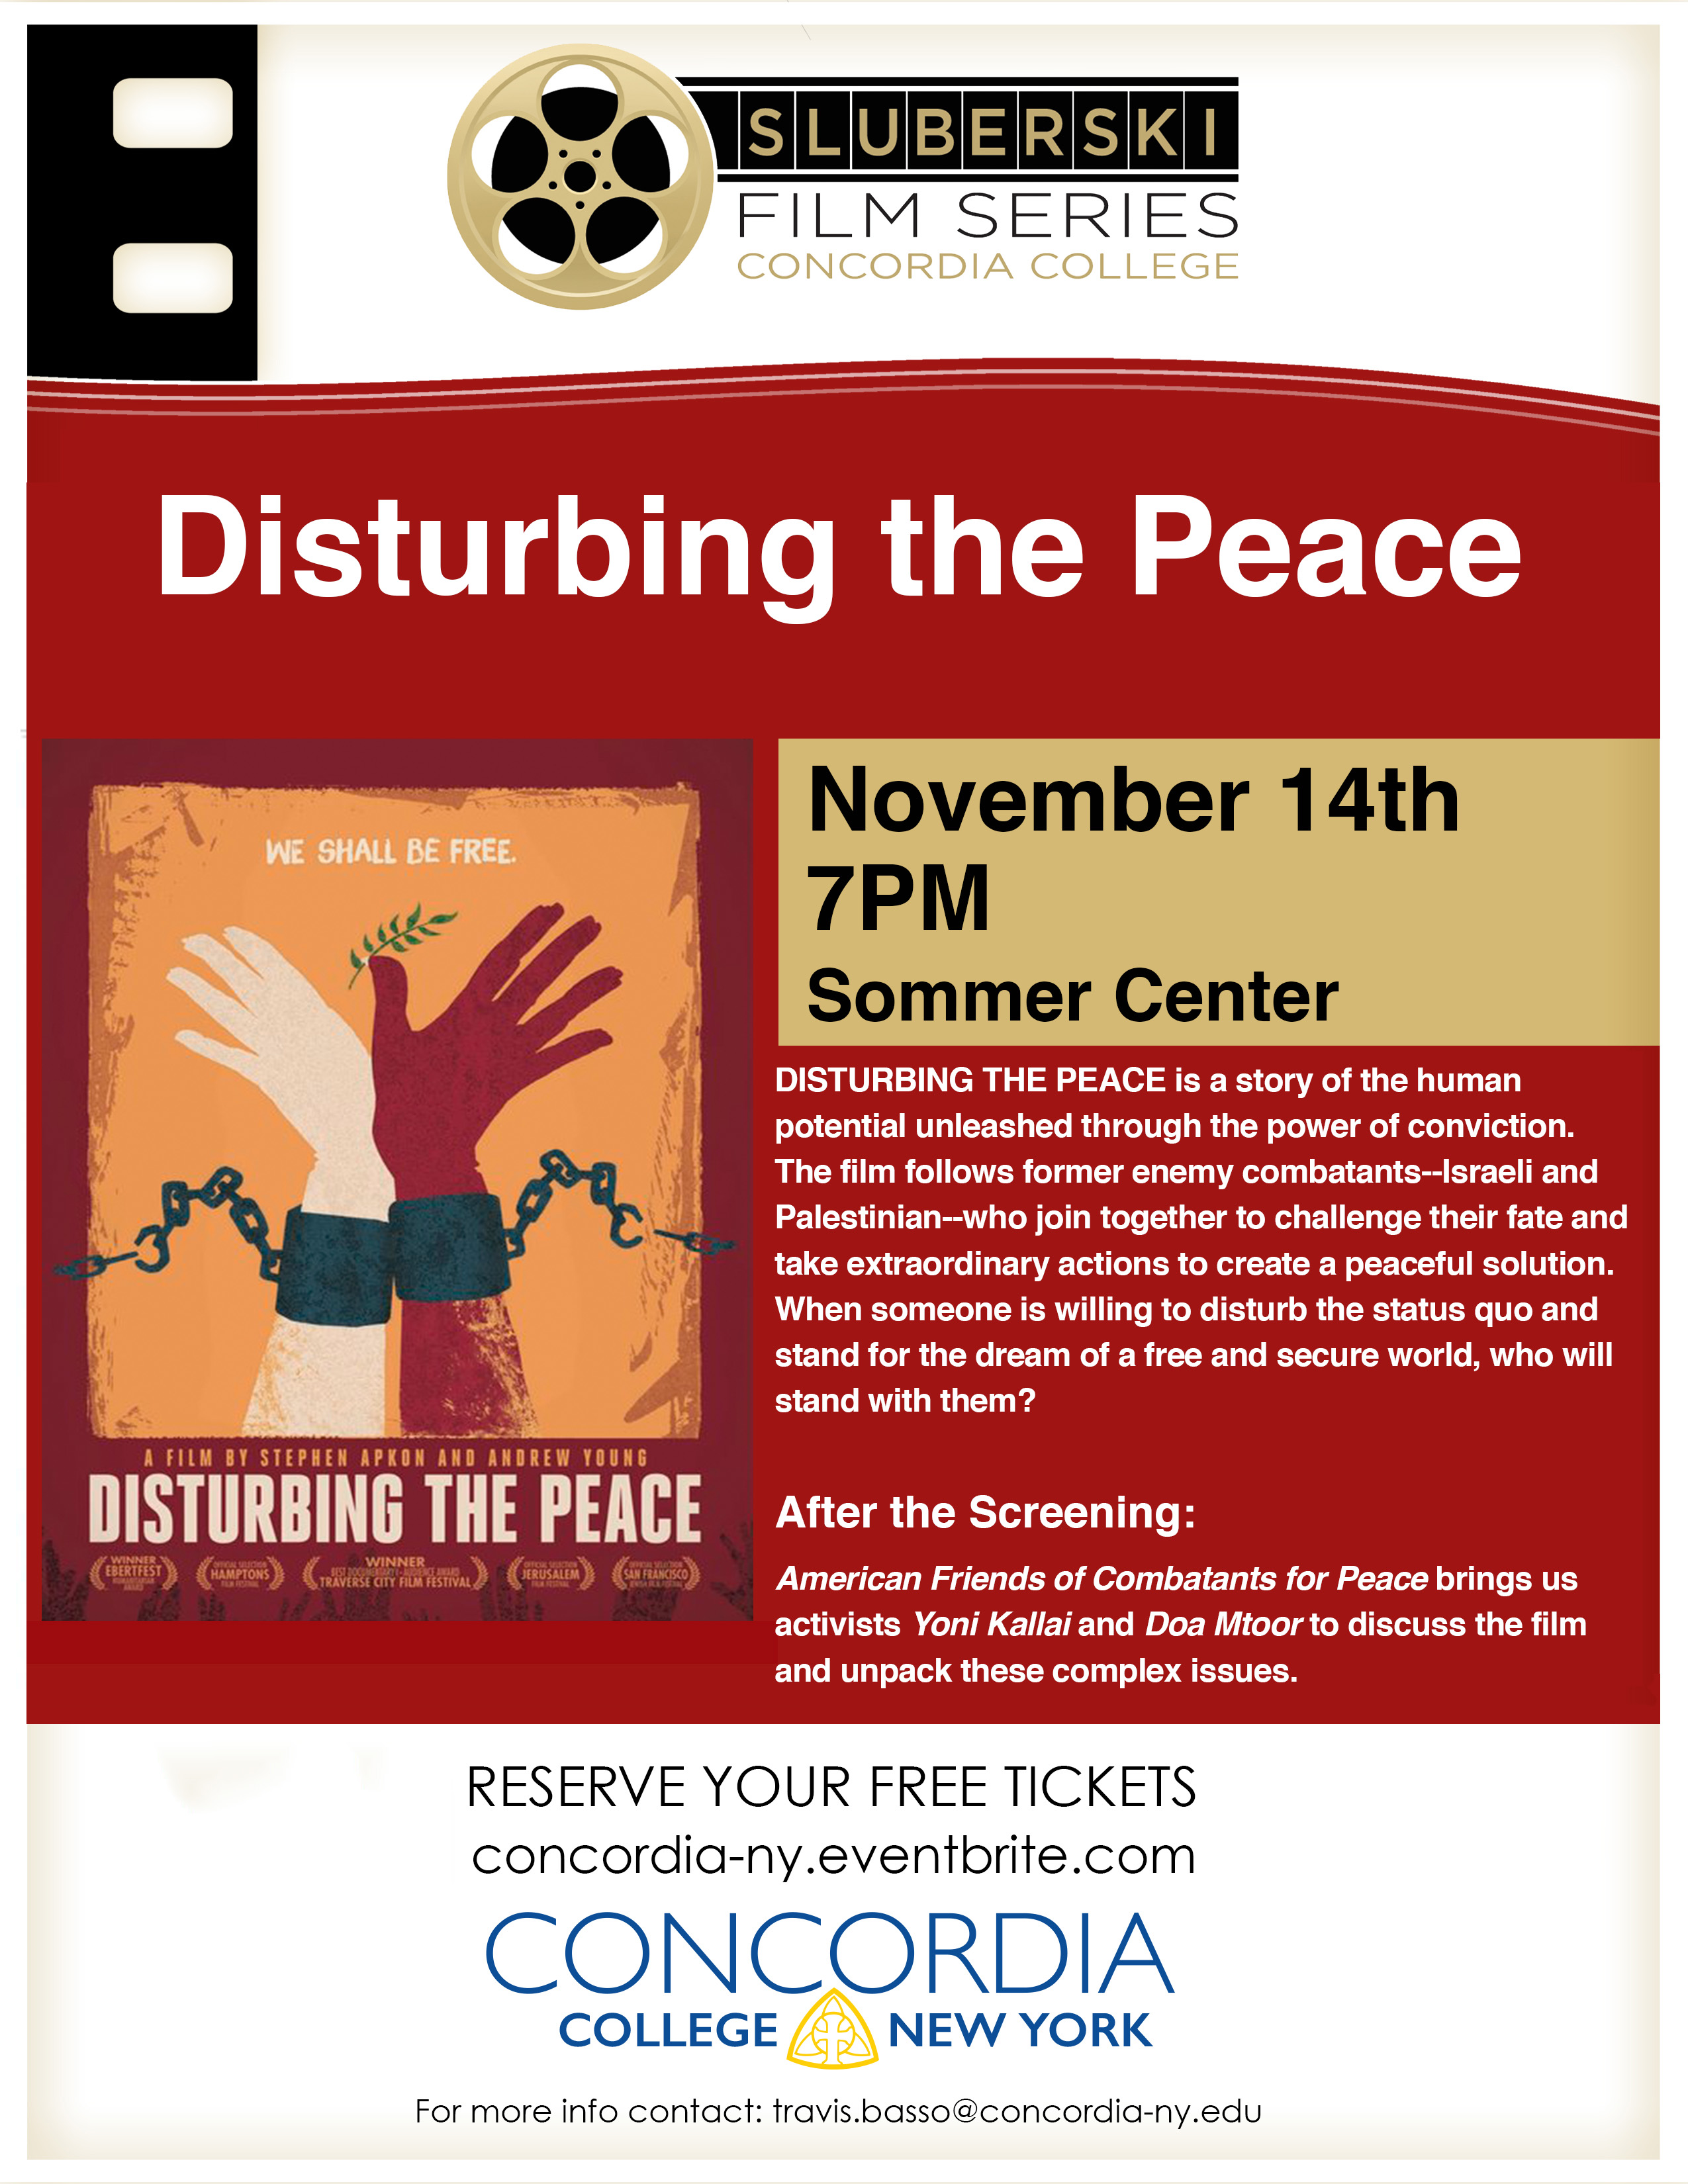 sluberski film series poster for disturbing the peace